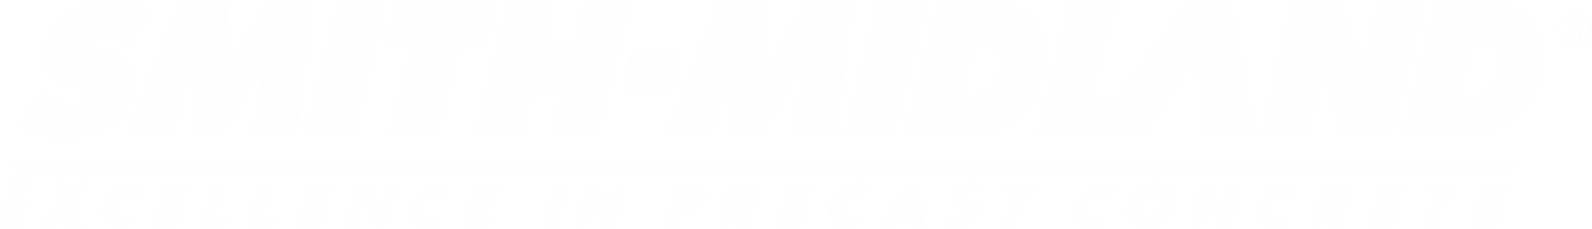 Smith-Midland logo grand pour les fonds sombres (PNG transparent)